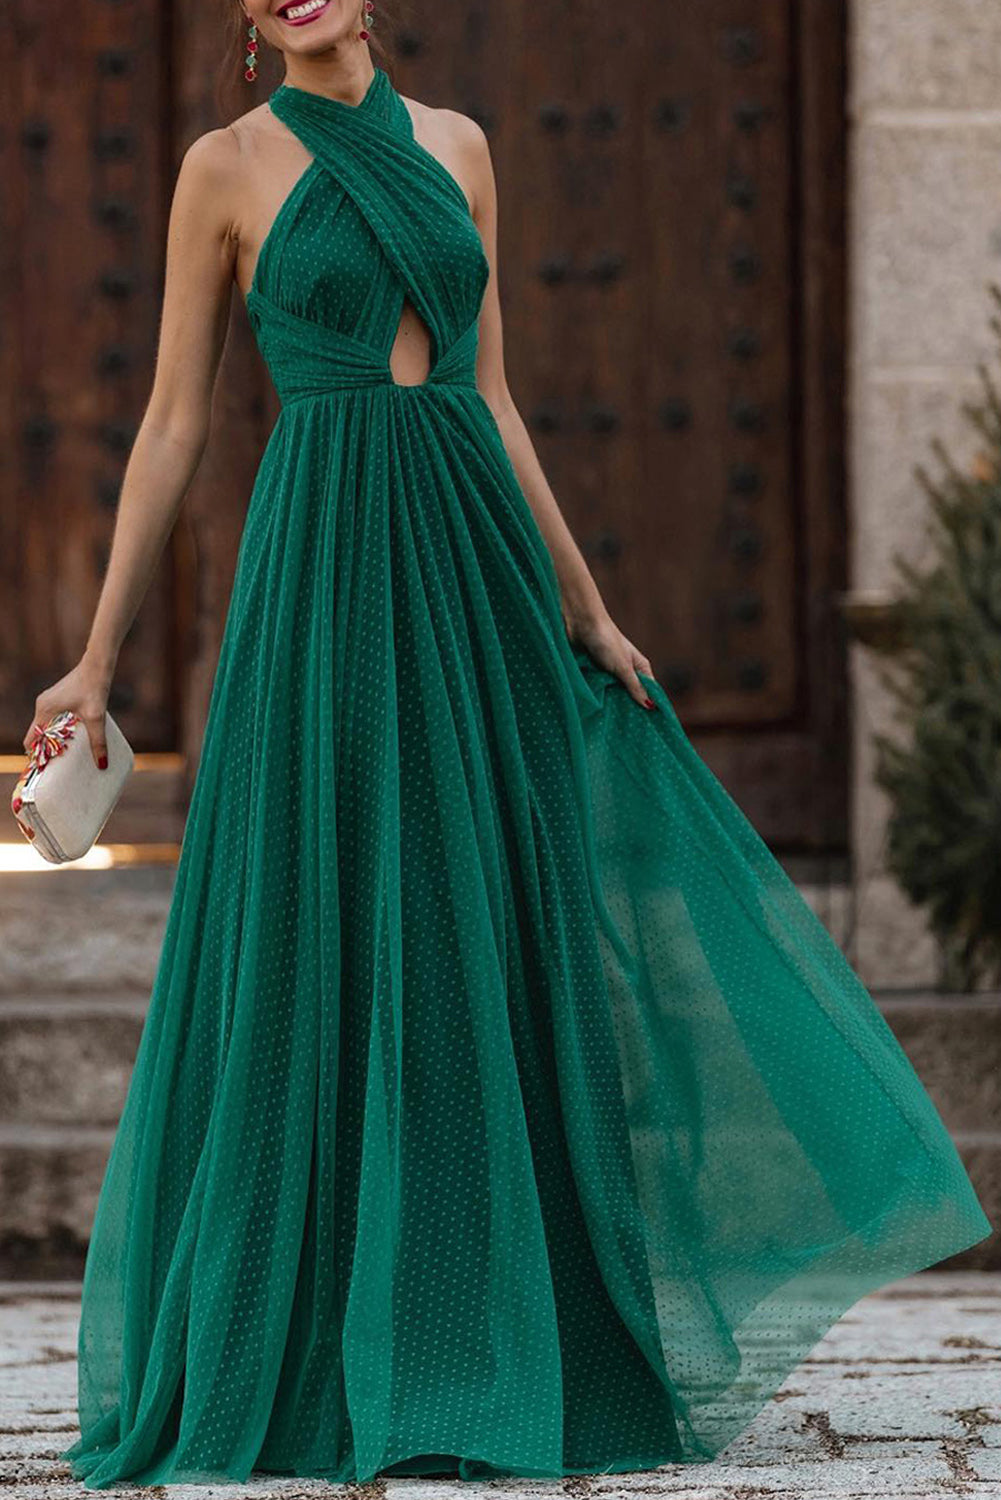 Fabulous Floral Criss Cross Halter Dress - Mint and Green - H&O